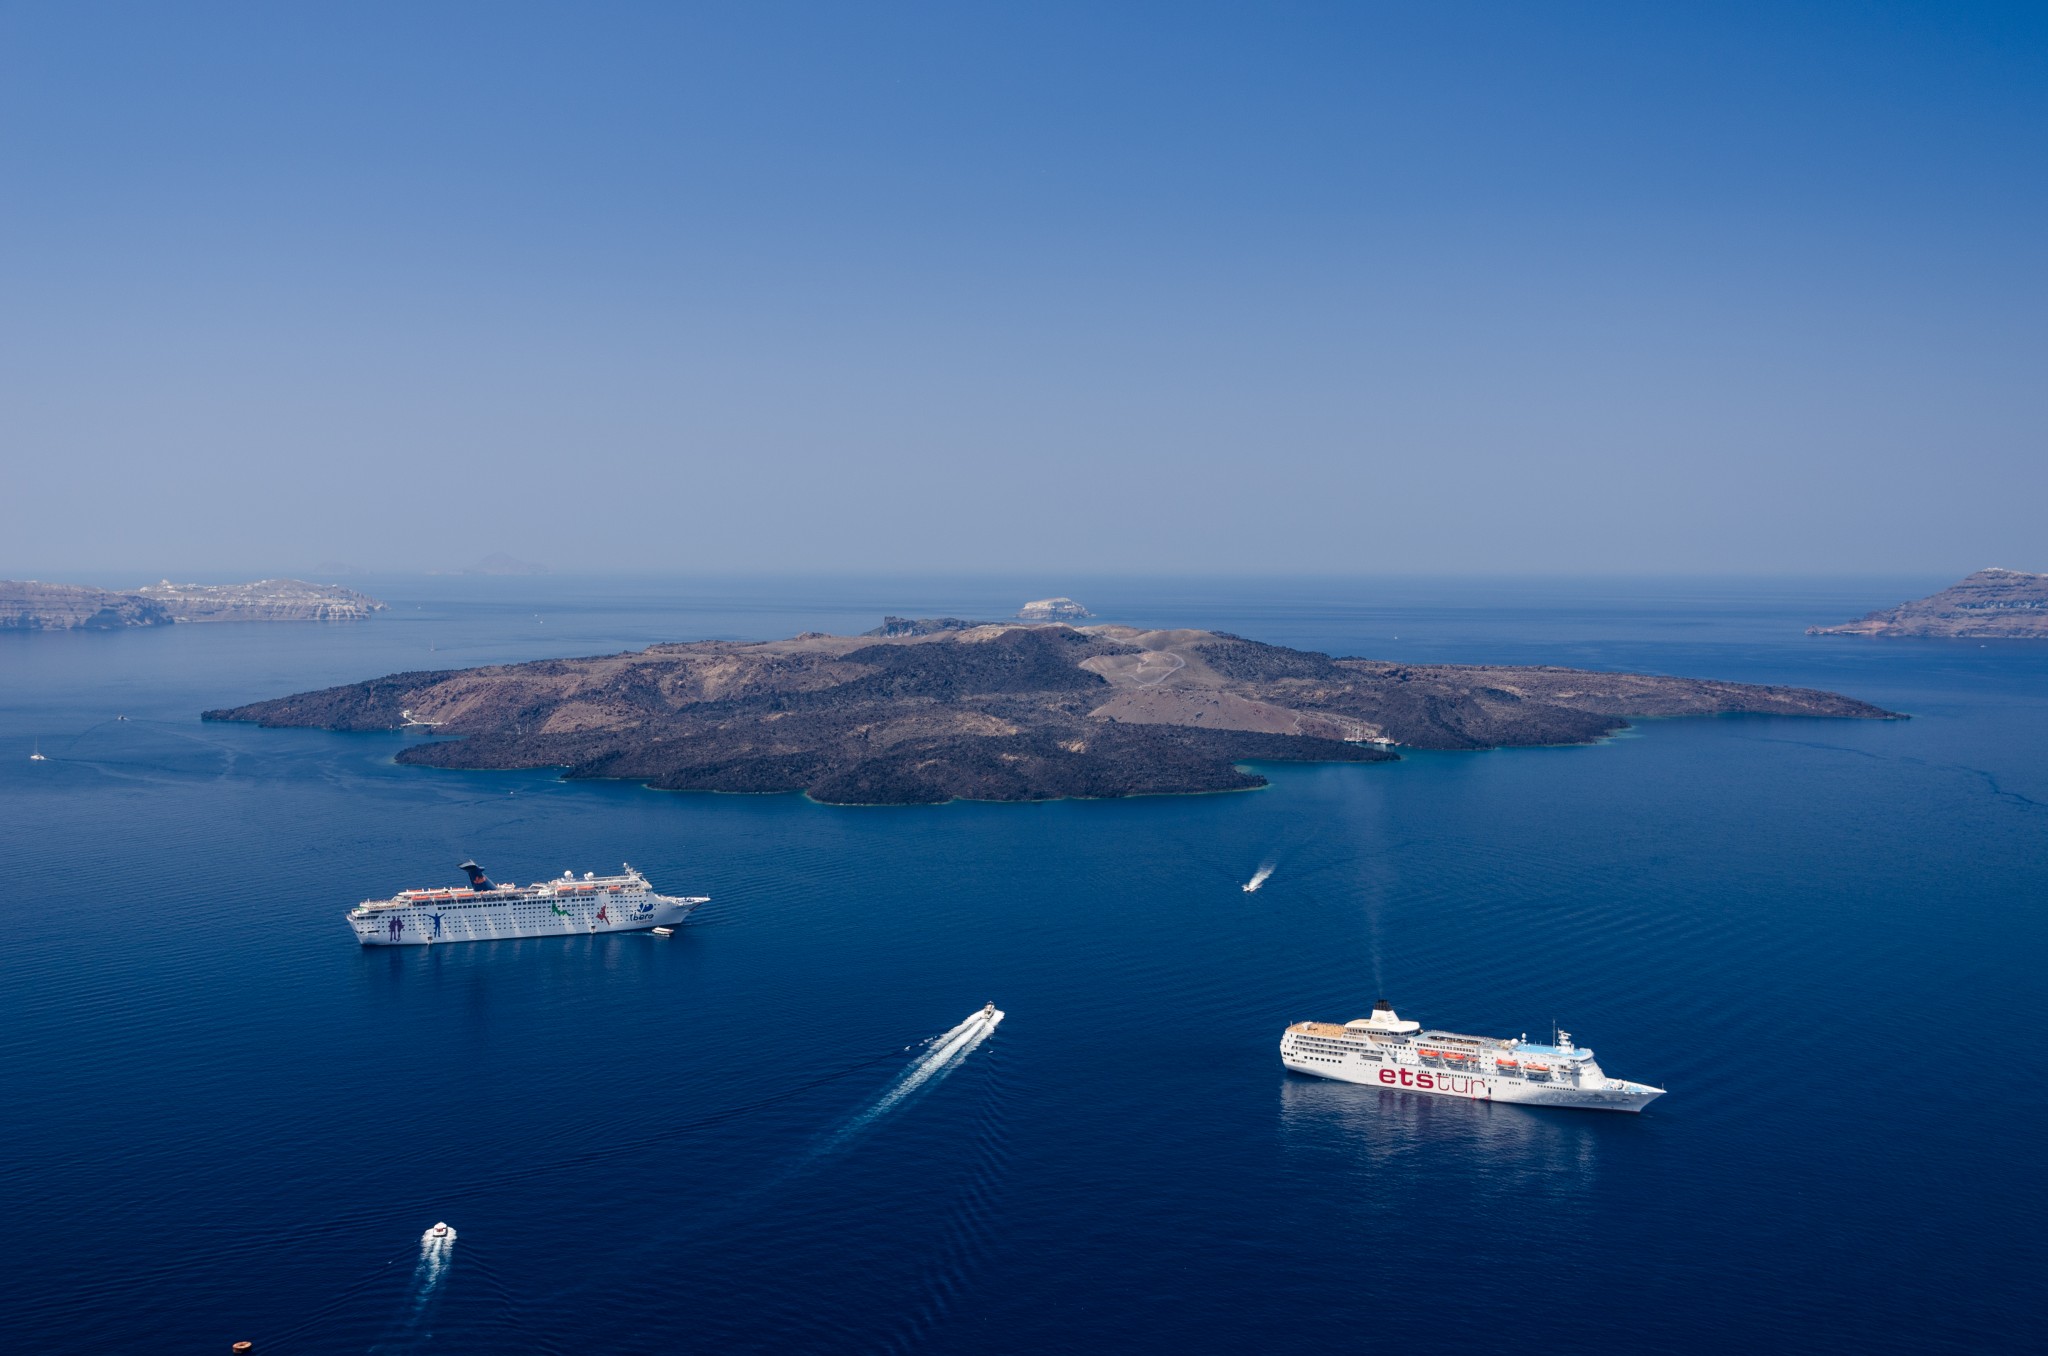 Santorini island photo